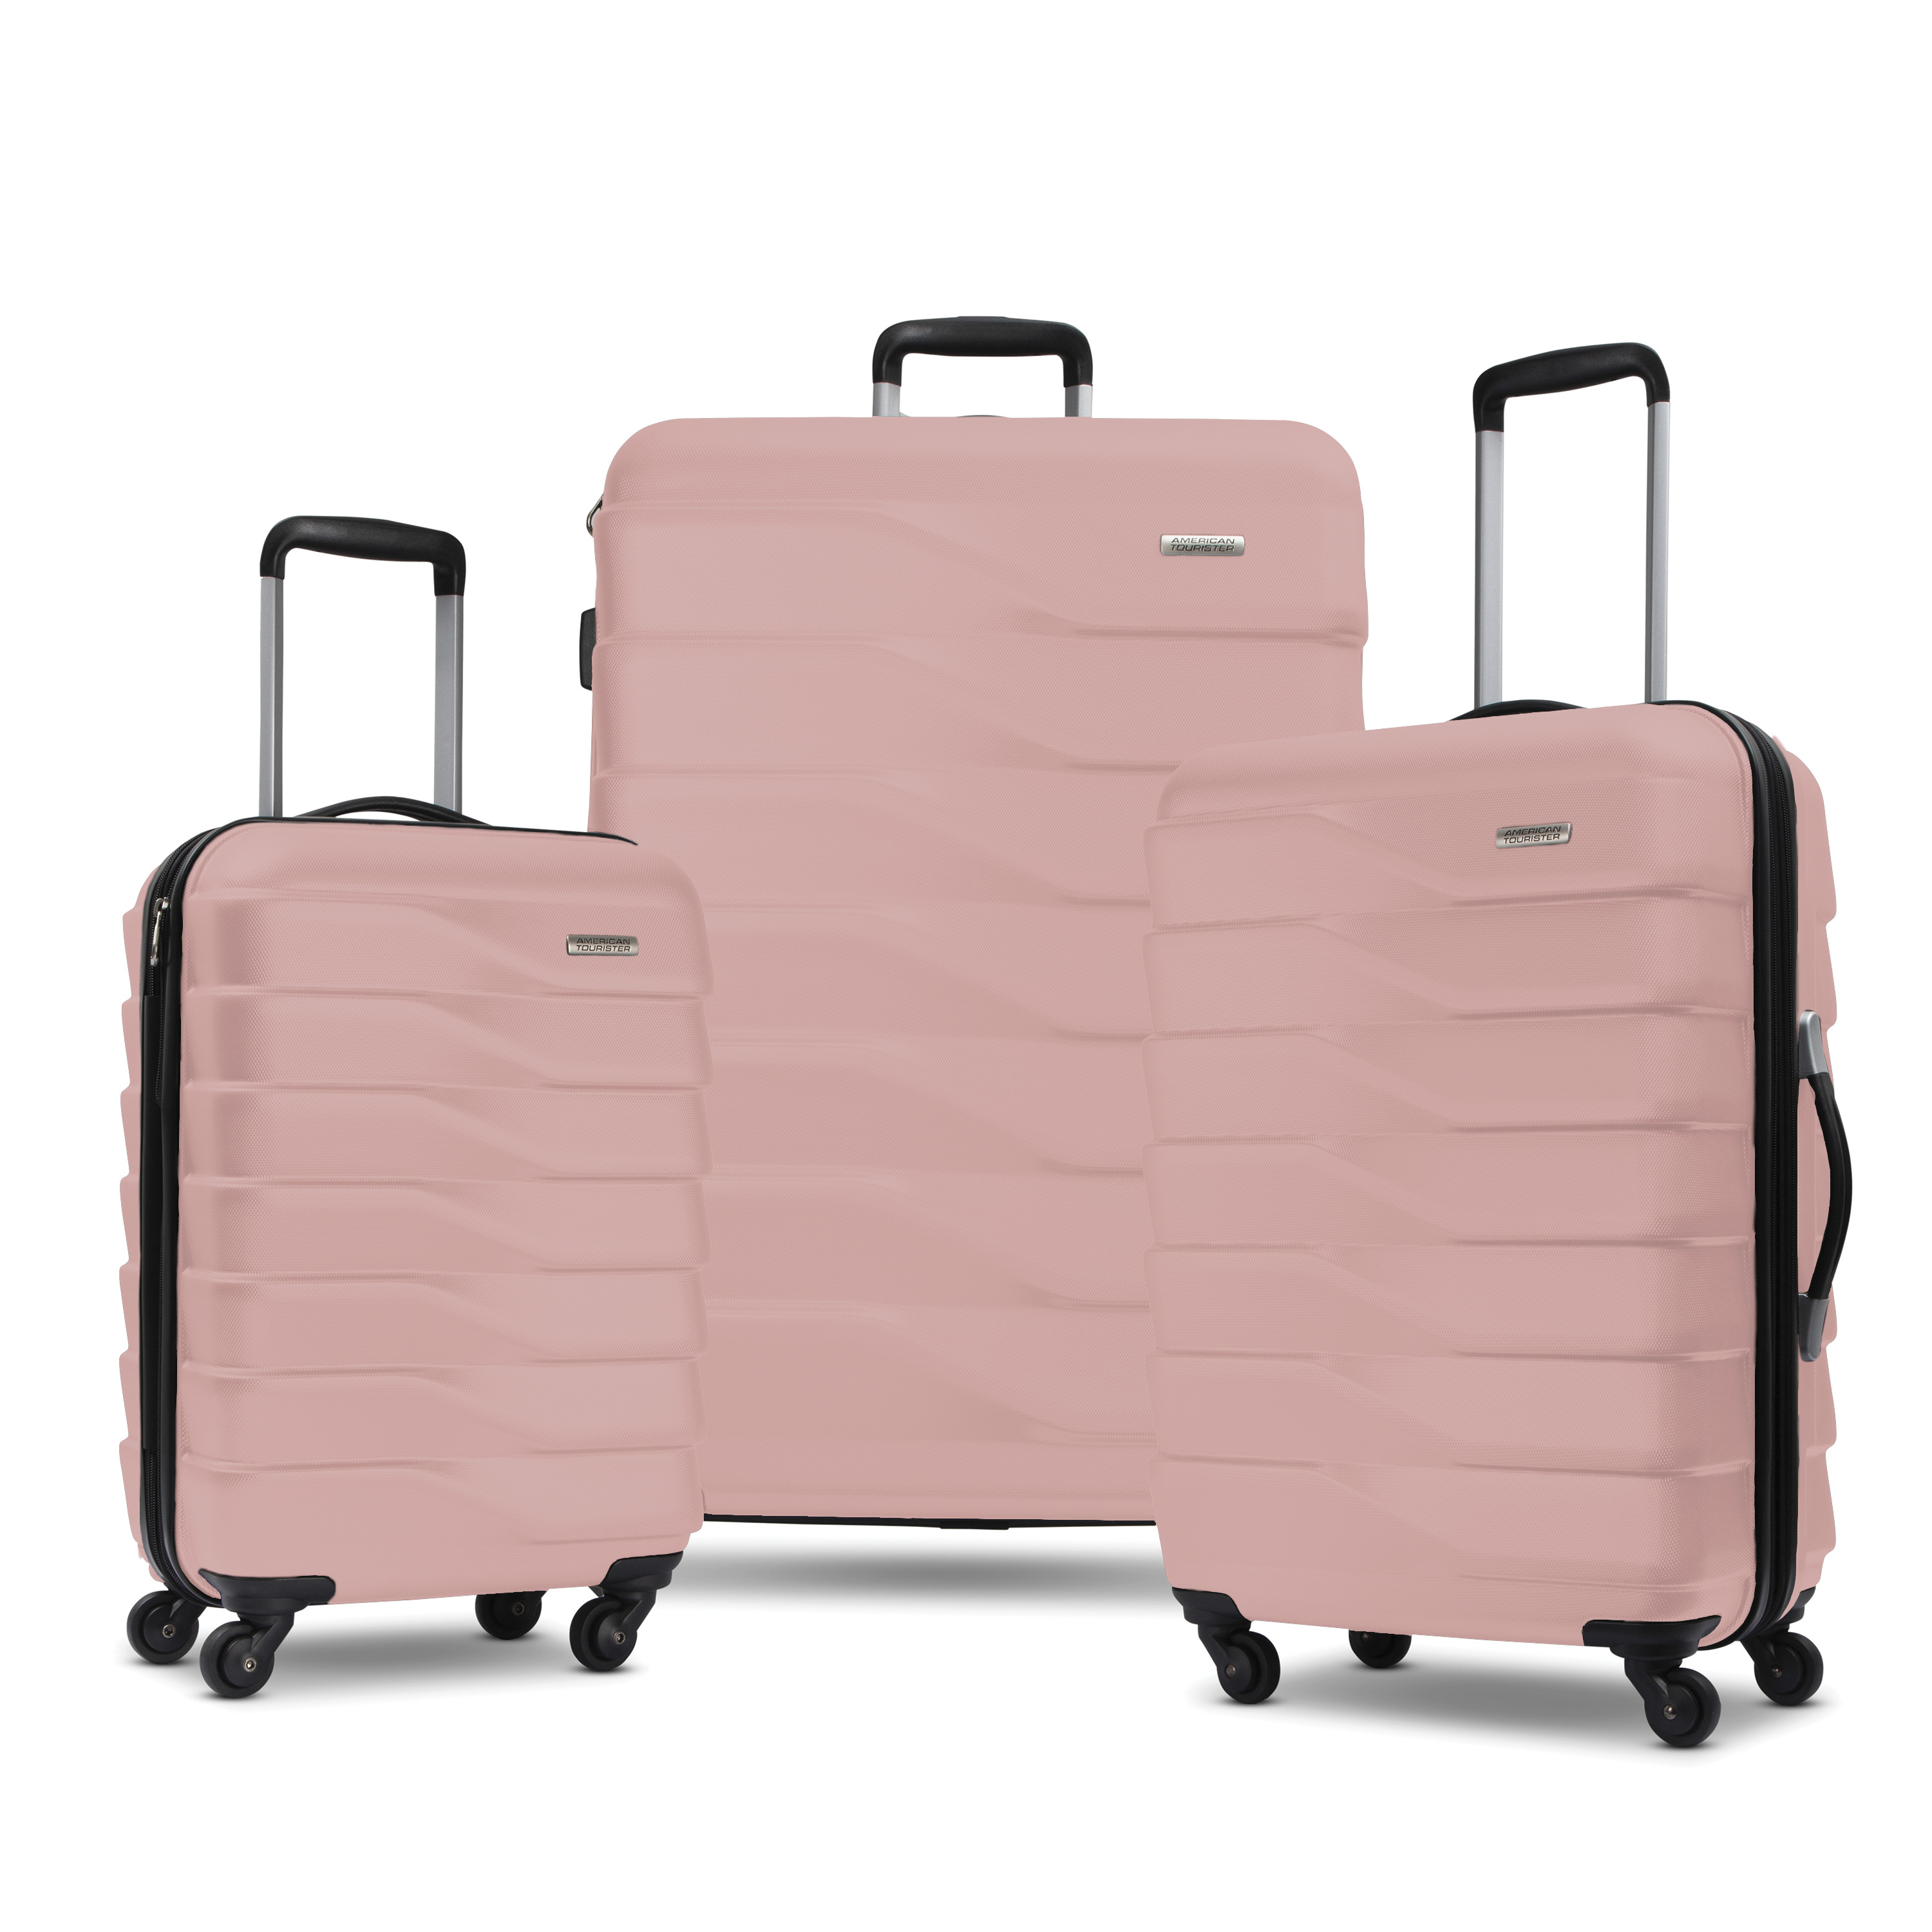 3-Piece American Tourister Luggage Set (20/24/28")